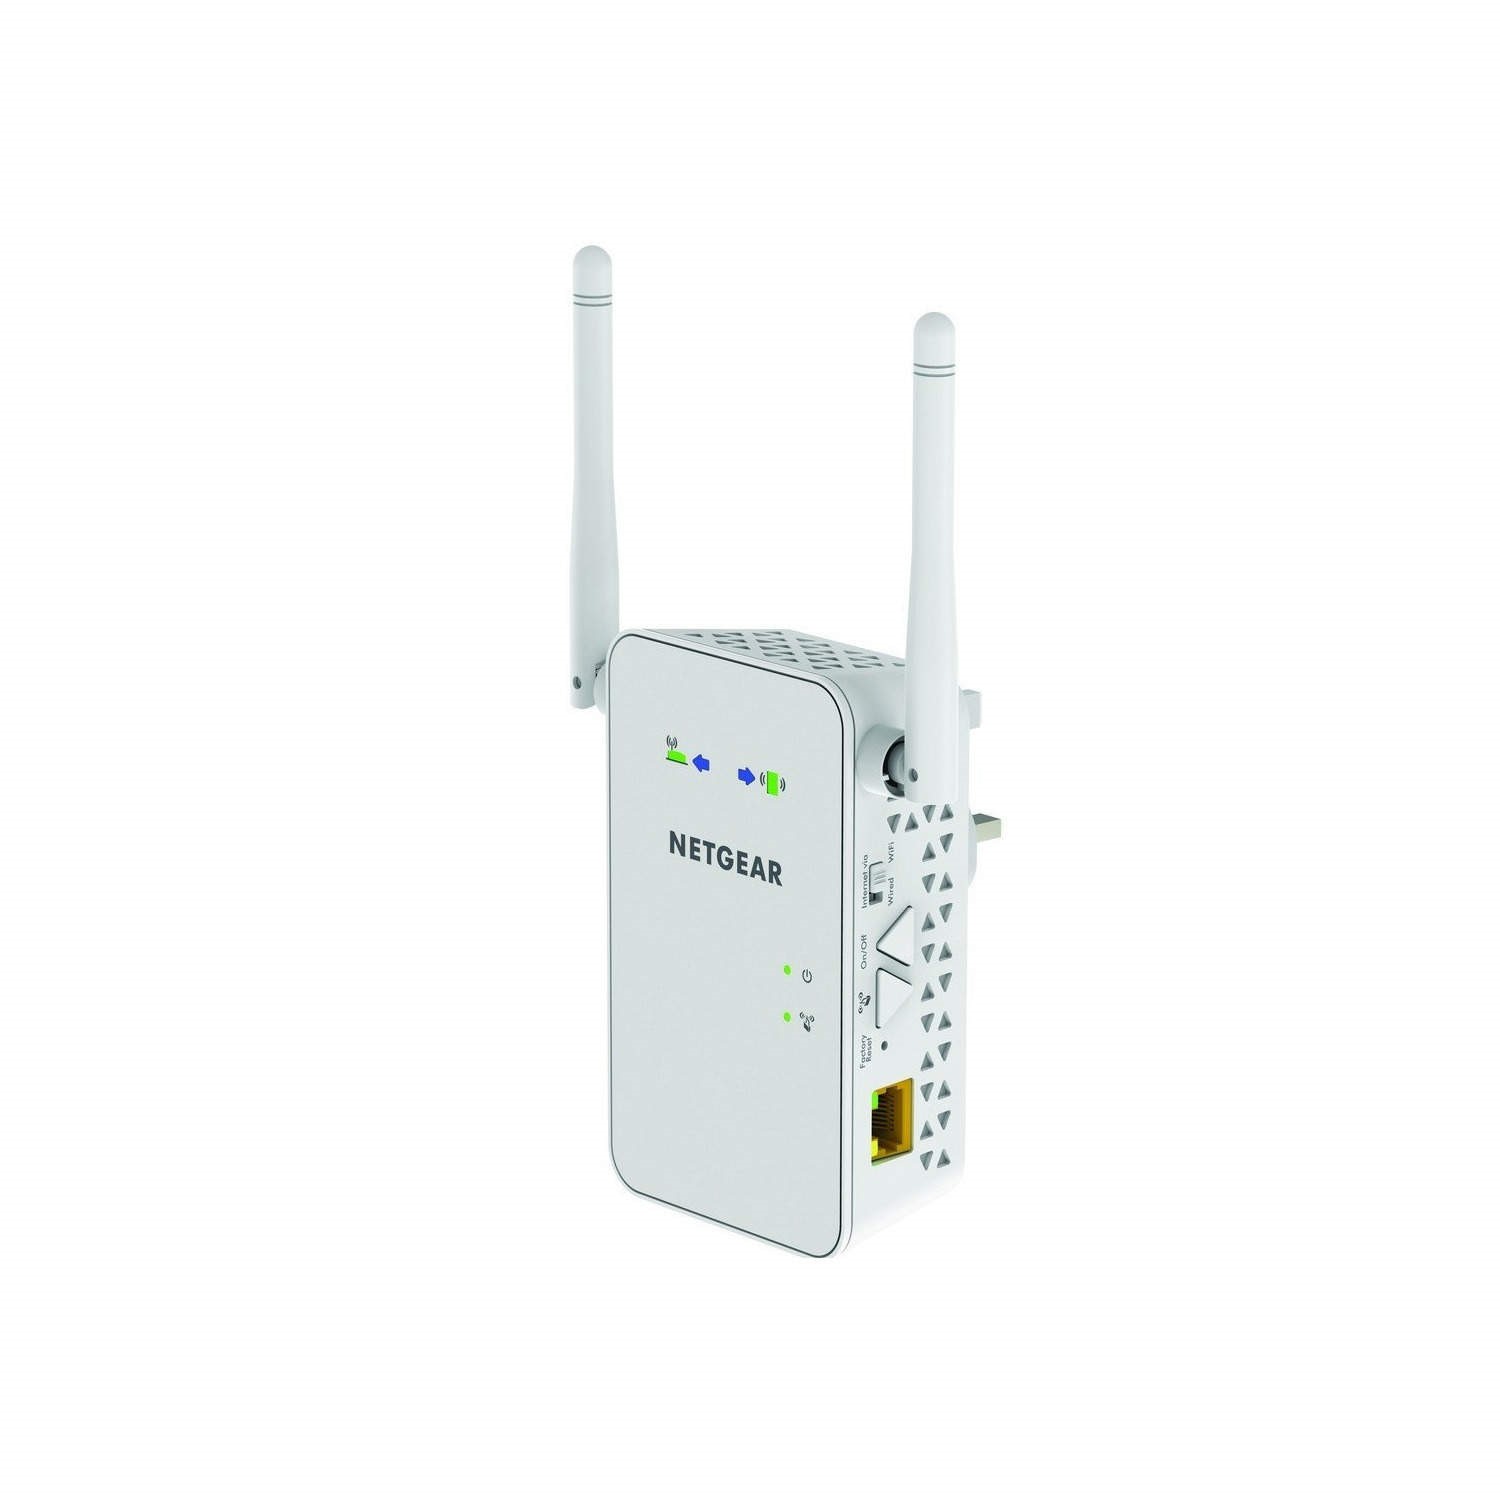 NETGEAR EX6100-100NAS AC750 WiFi Range Extender with Gigabit Ethernet 